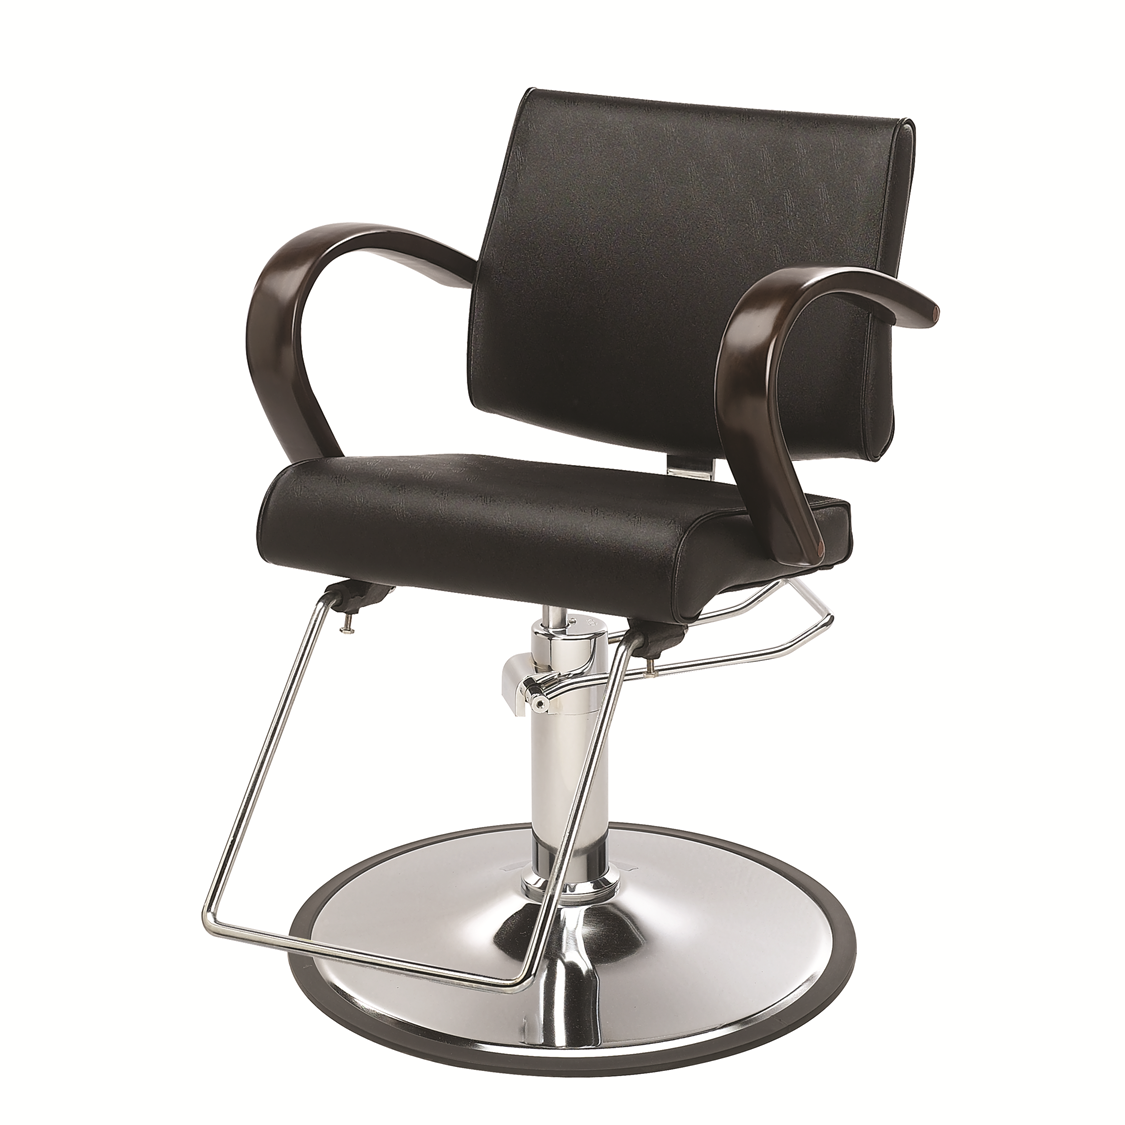 Wolcott Salon Styling Chair - Garfield Commercial Enterprises Salon Equipment Spa Furniture Barber Chair Luxury